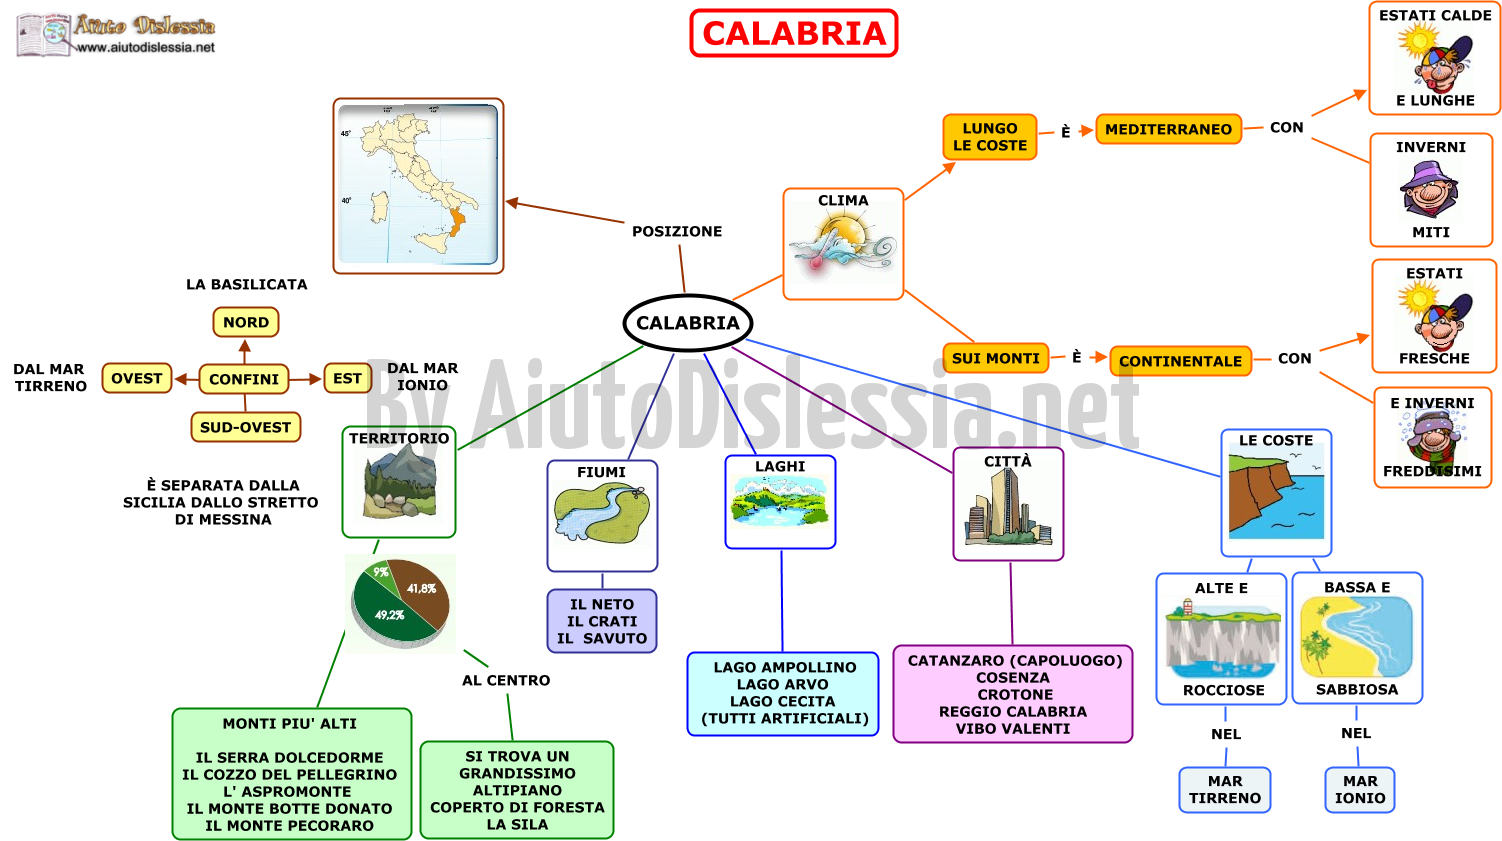 CALABRIA 2